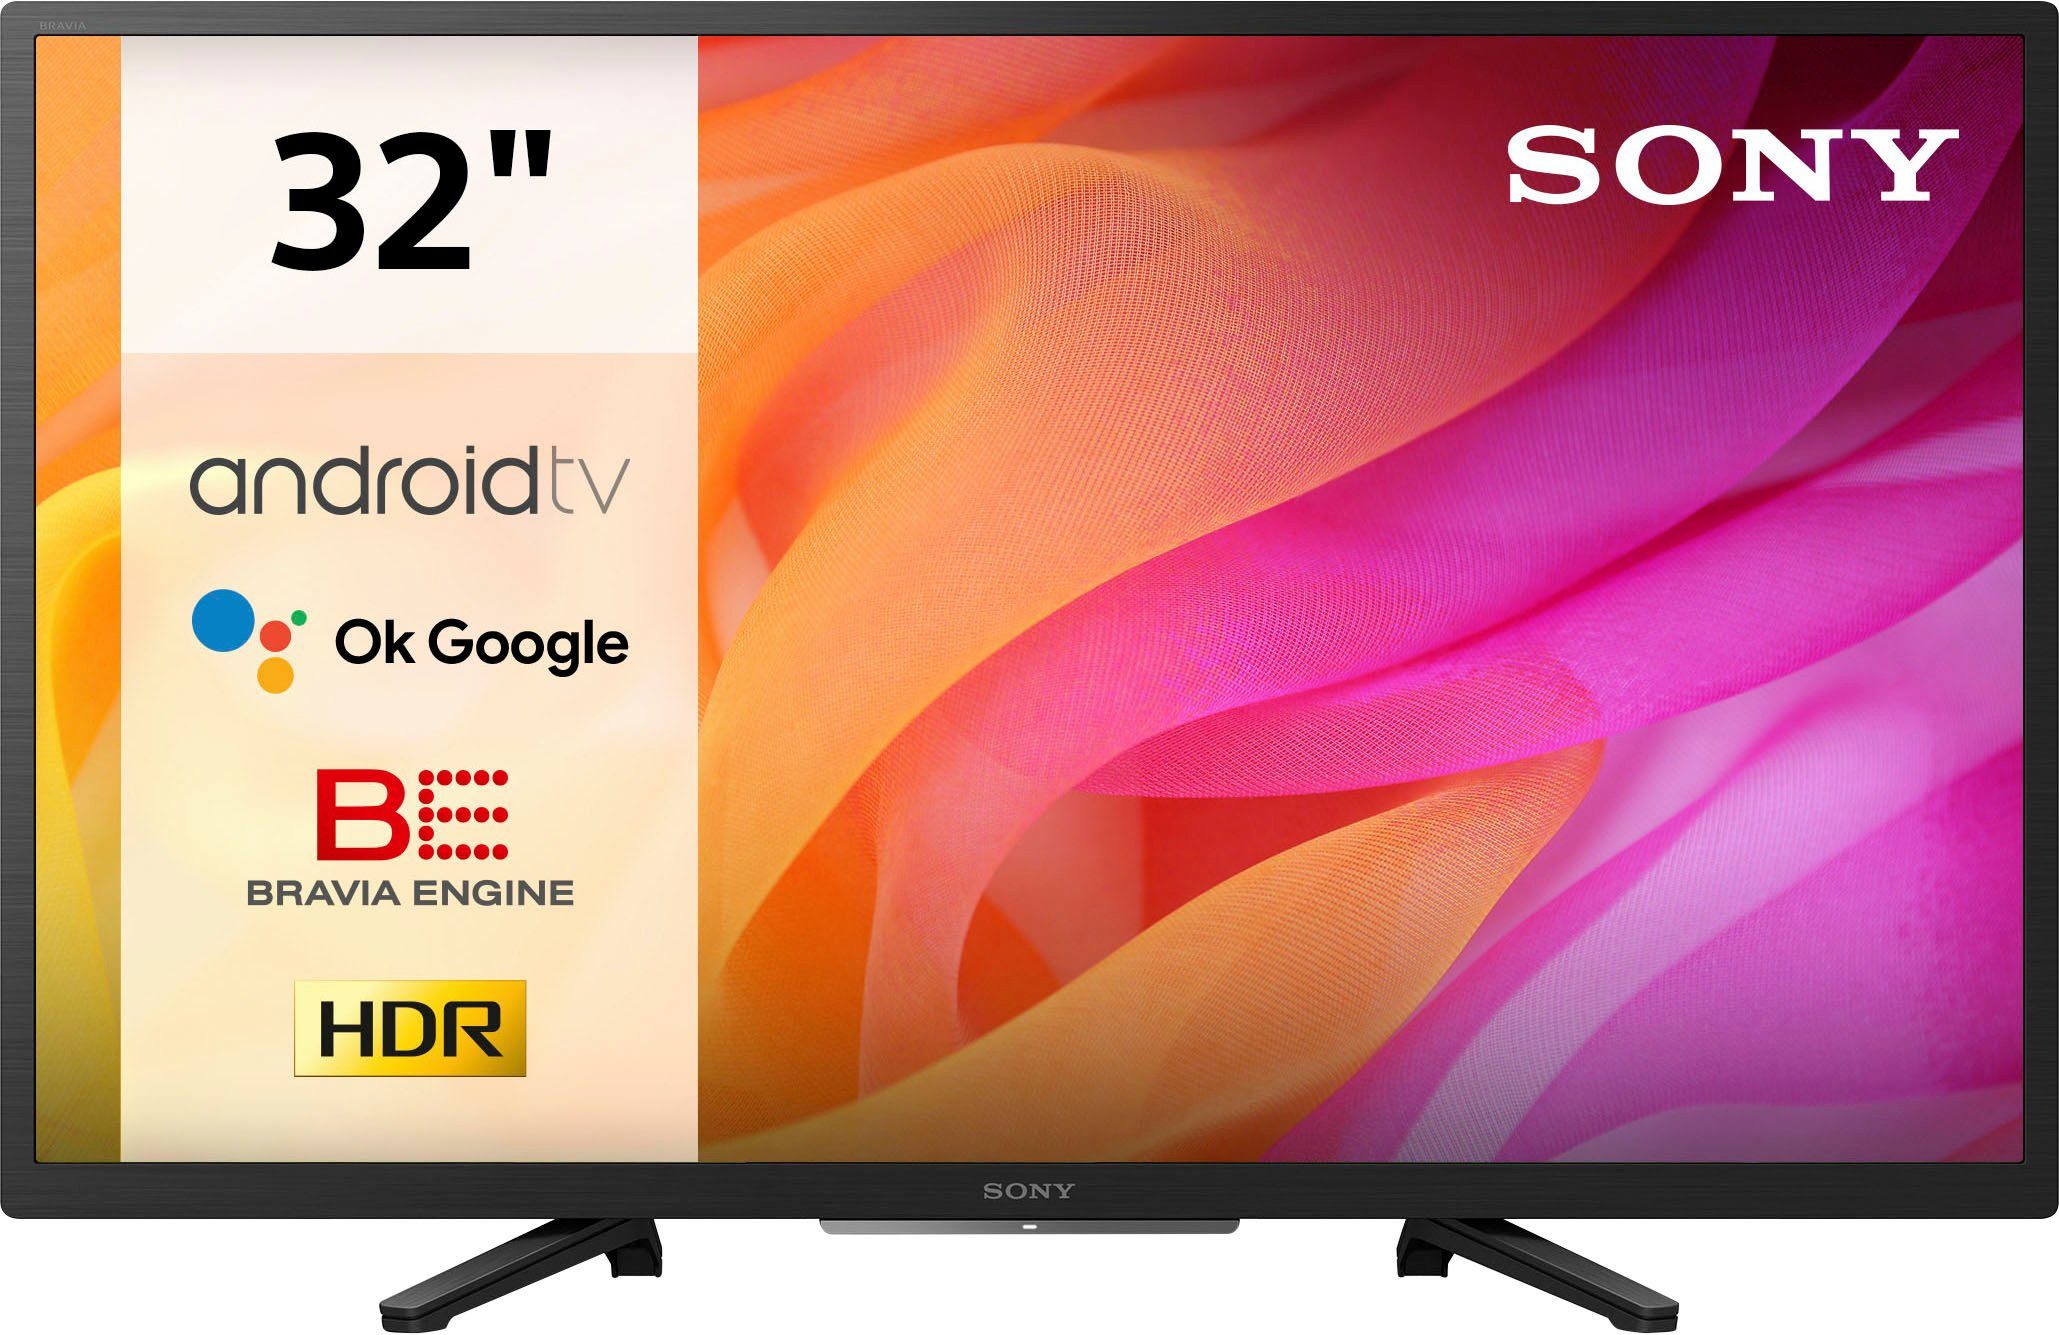 LCD-LED TV, KD-32W800/1 TV, Android Fernseher BRAVIA, Heady, HD Smart cm/32 HDR) Tuner, Sony (80 Zoll, Triple WXGA,